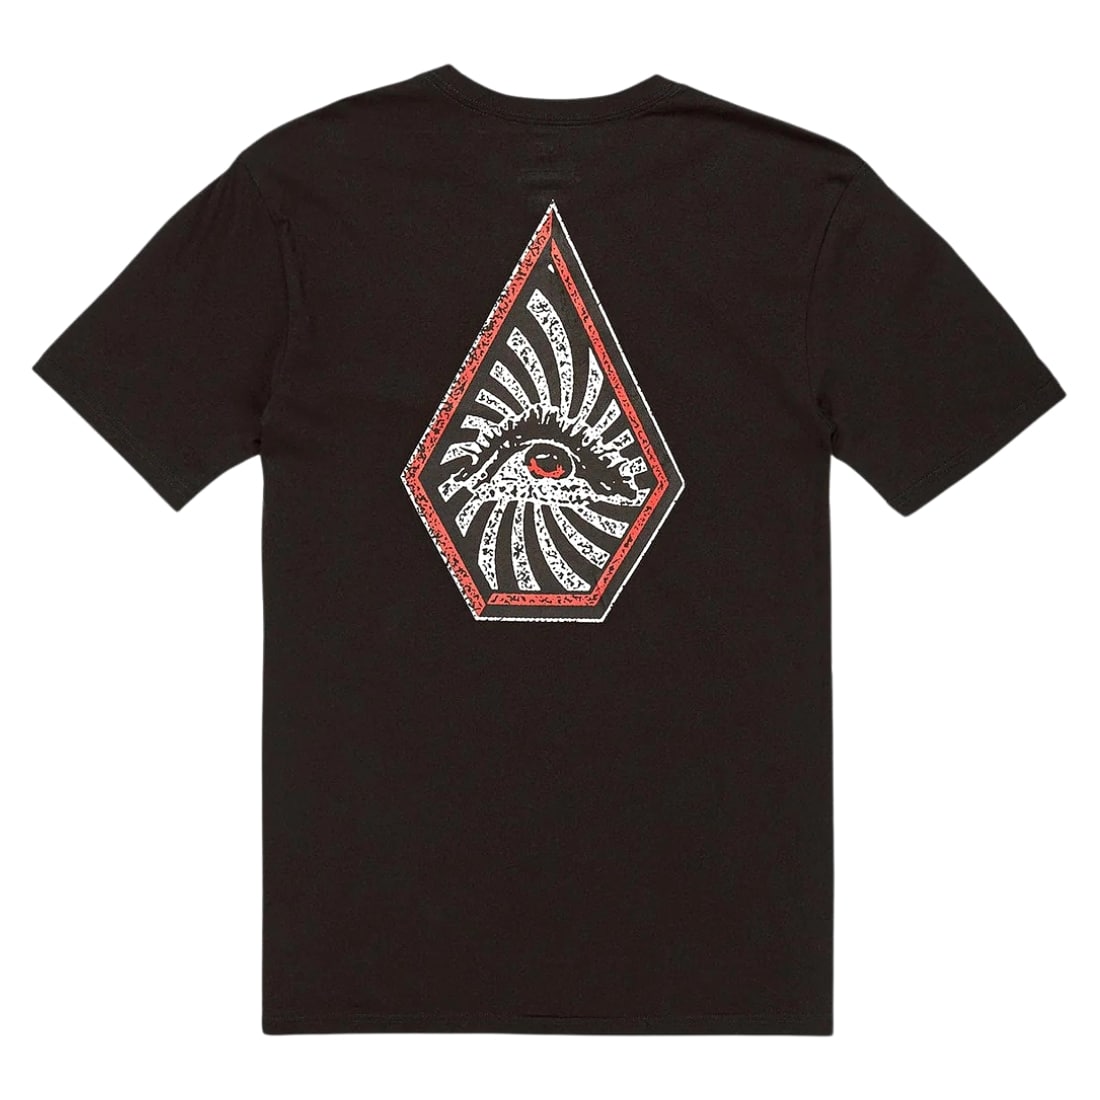 Volcom Surf Vitals Jack Robinson T-Shirt - Black - Mens Graphic T-Shirt by Volcom